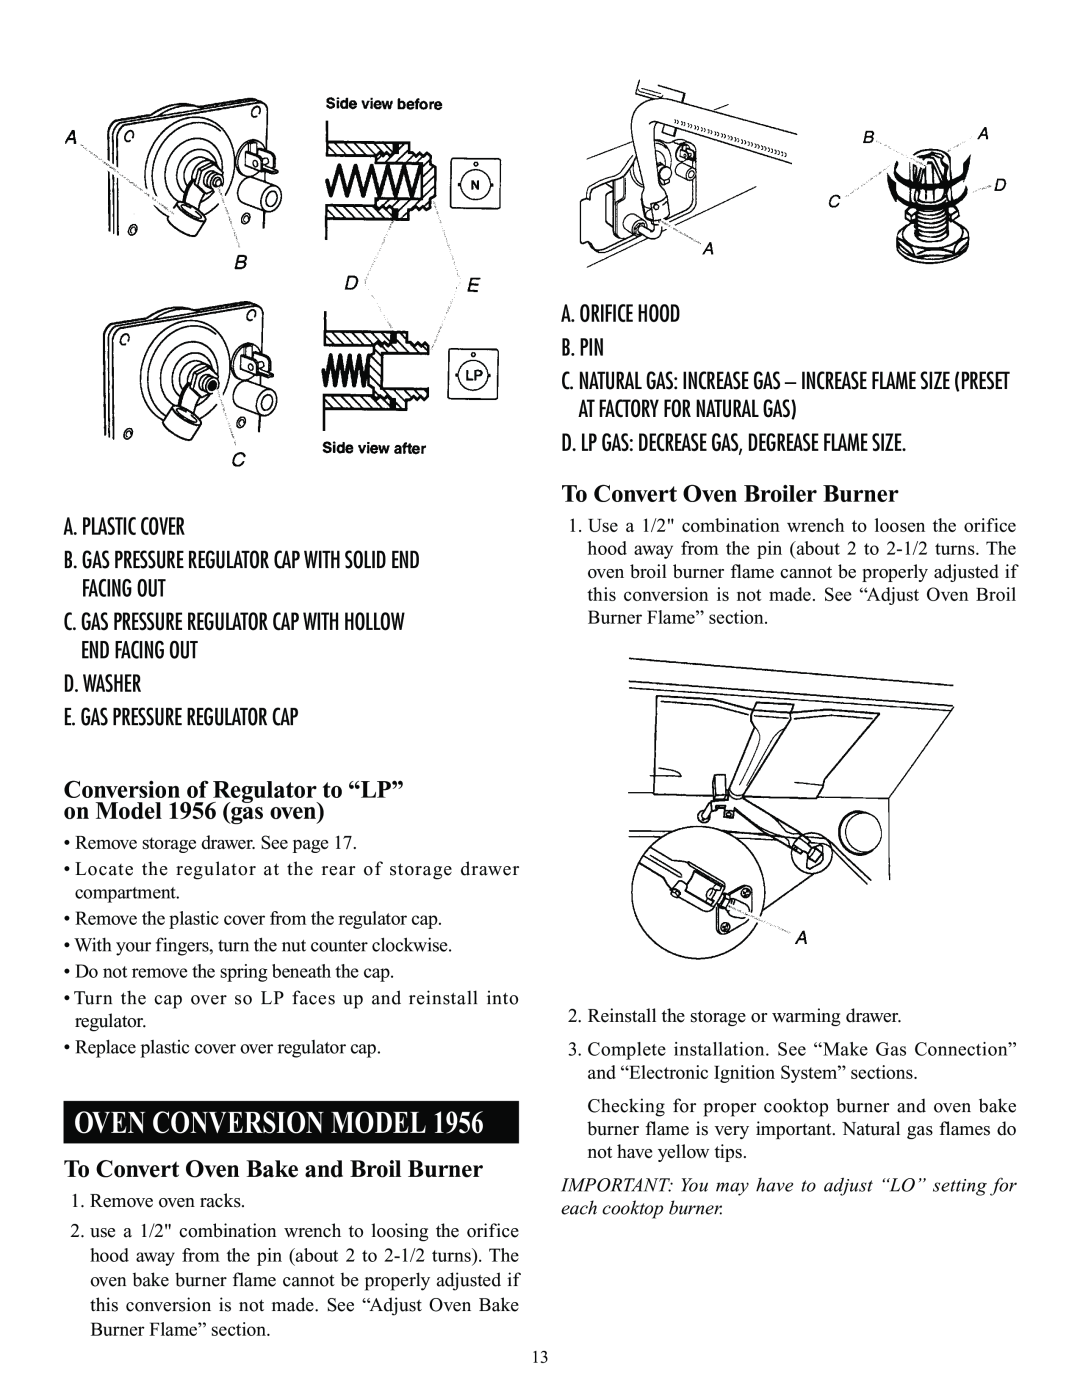 Elmira Stove Works 1954 manual Oven Conversion Model, To Convert Oven Bake and Broil Burner, To Convert Oven Broiler Burner 